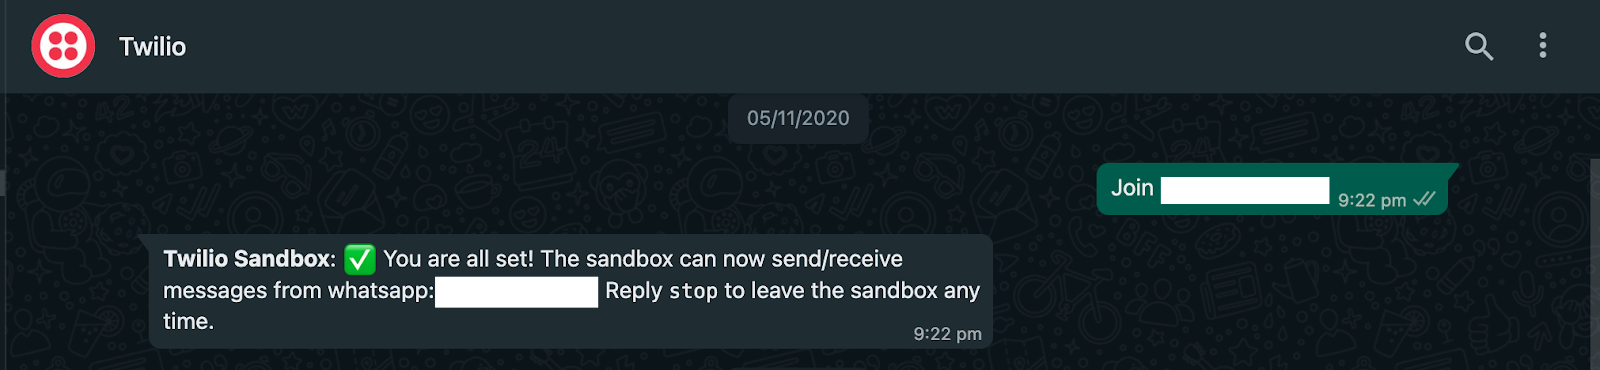 Twilio WhatsApp Sandbox message confirmation